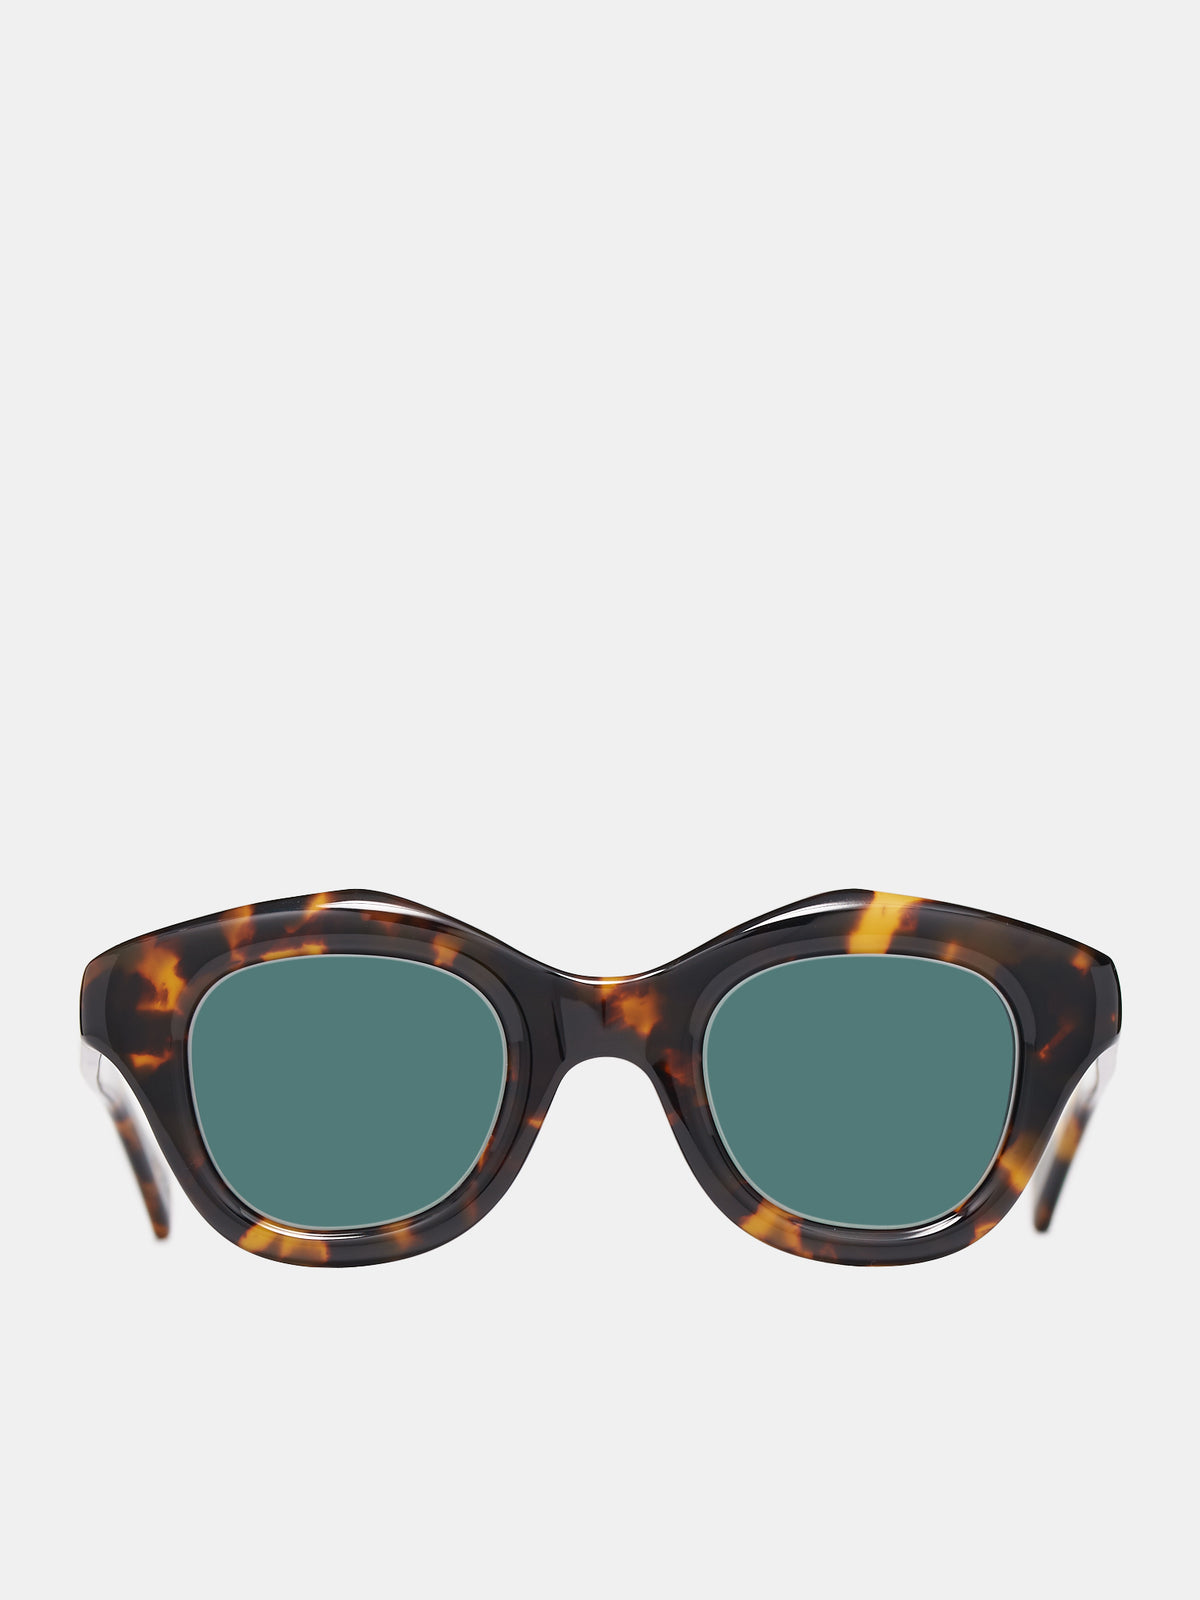 Hook Sunglasses (HOOK-YELLOW-TORTSHELL-GRAY4)